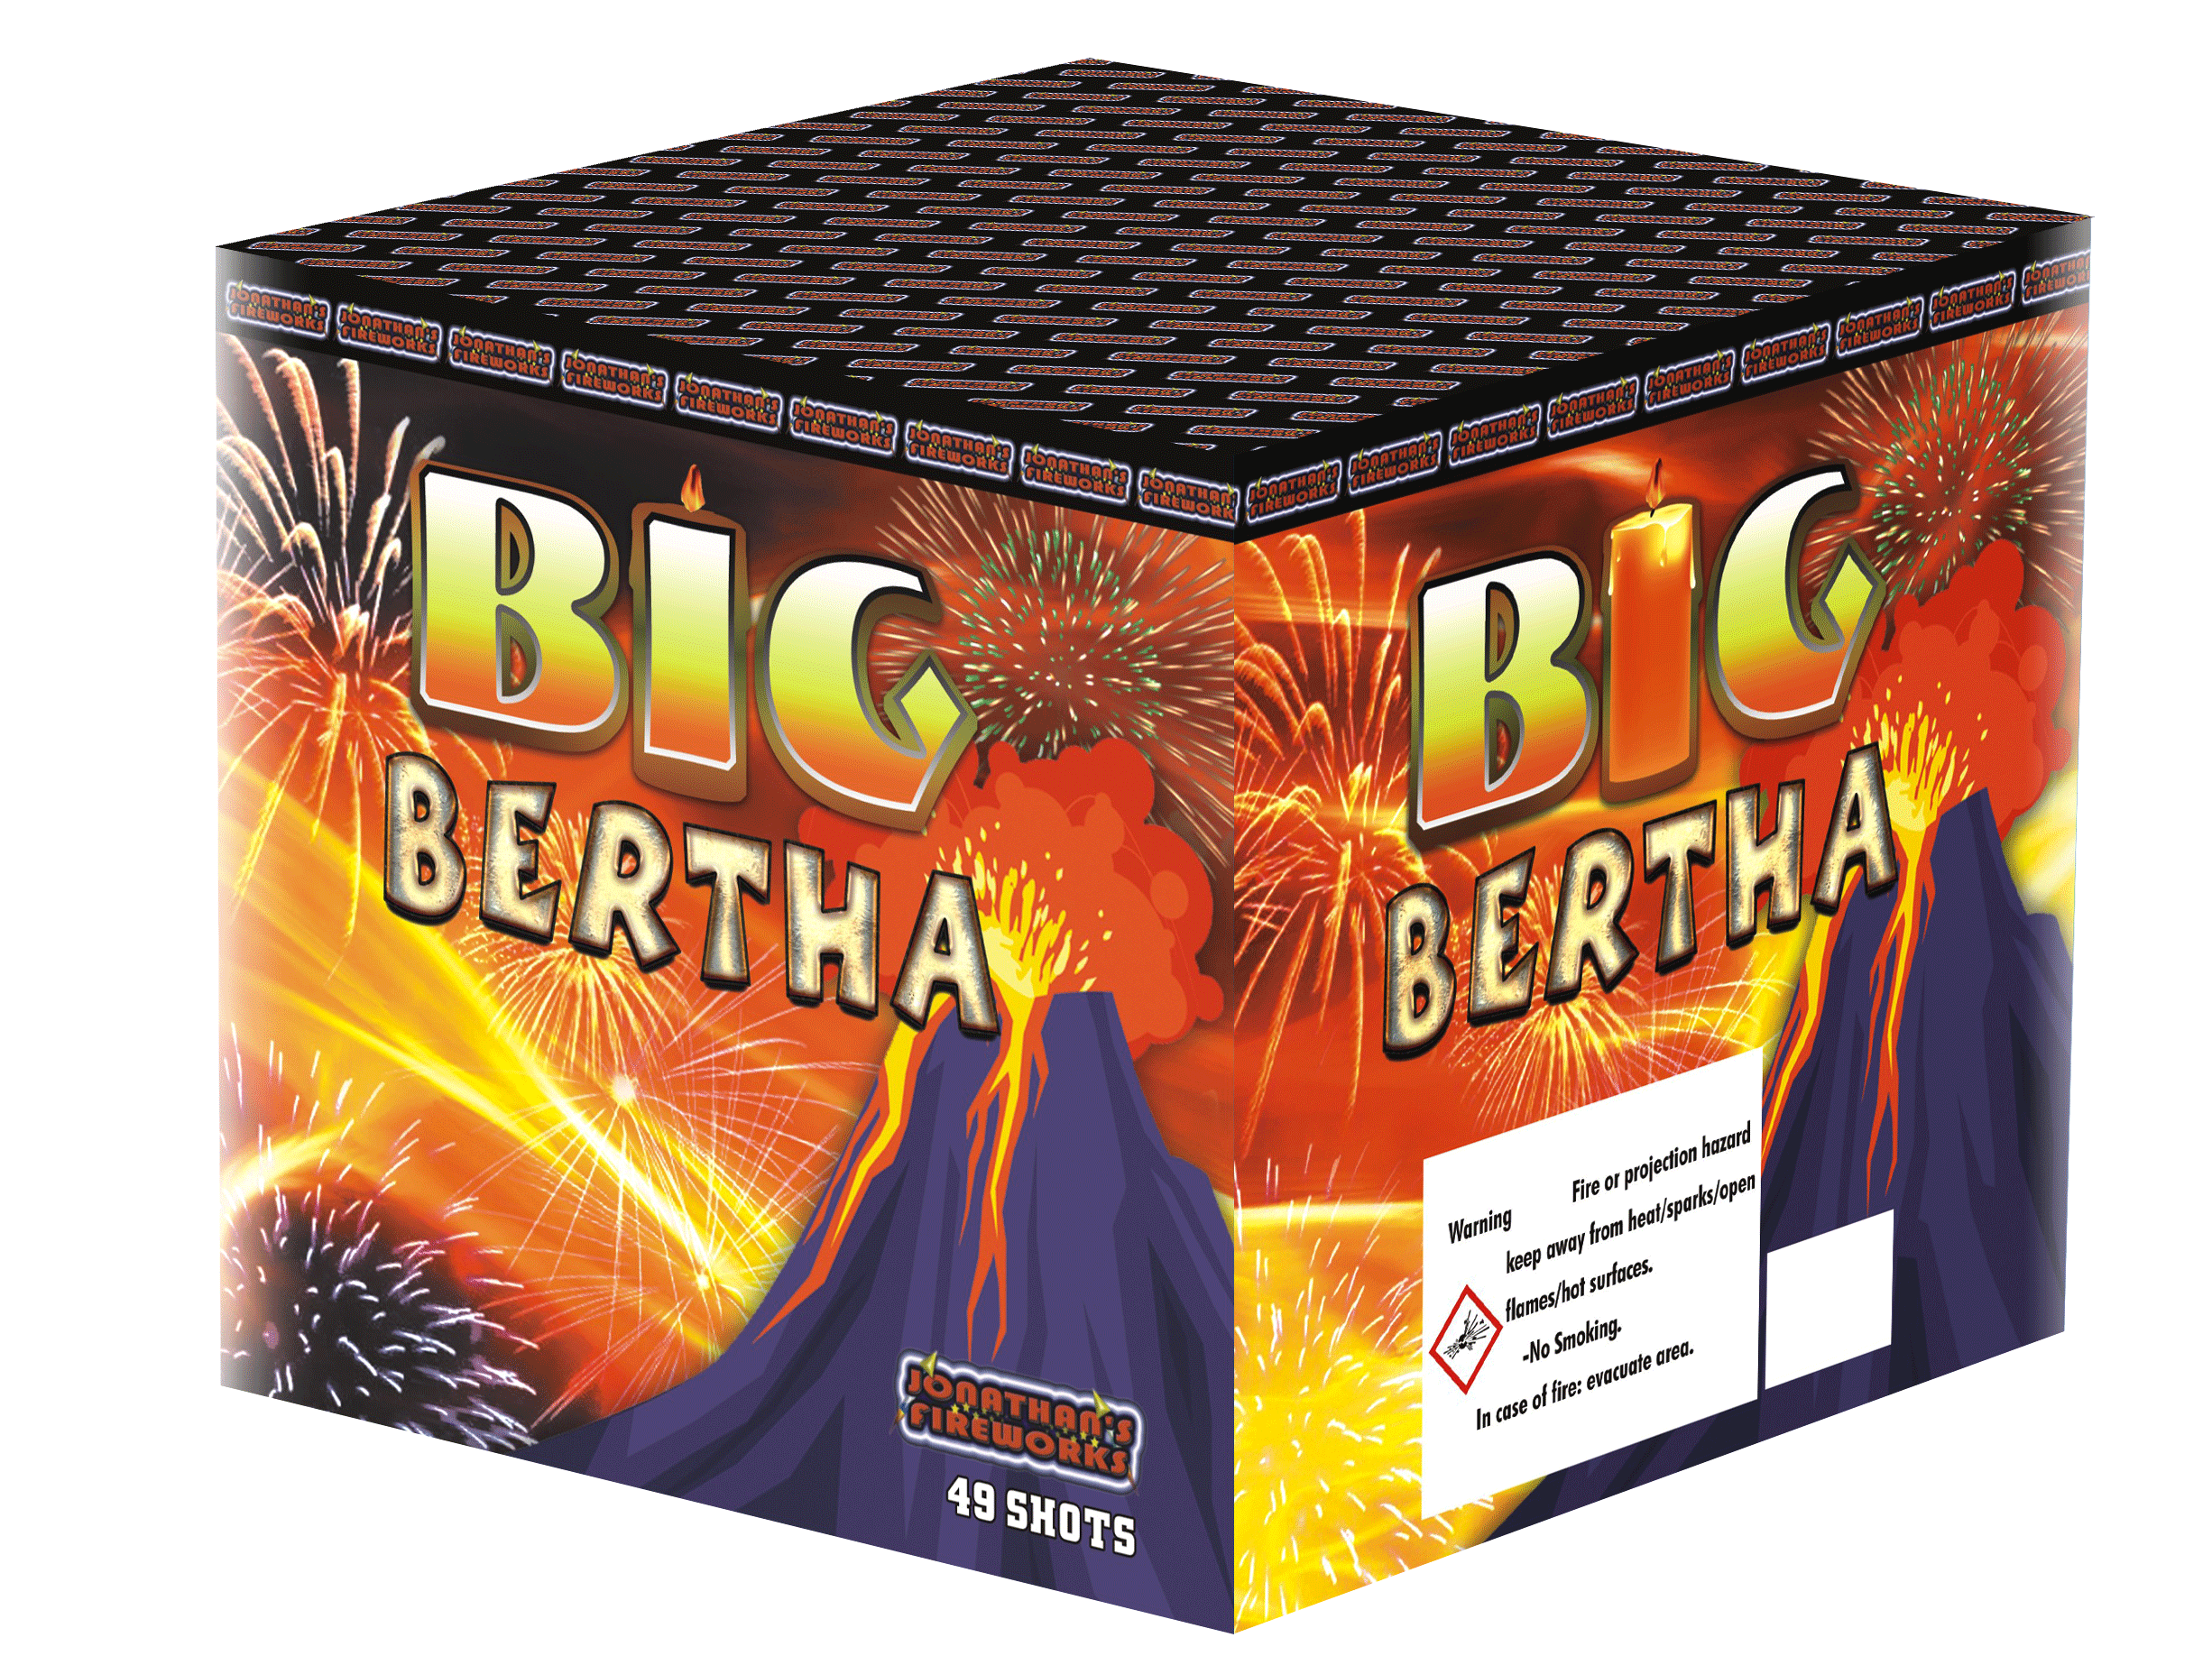 Big Bertha save £20.00